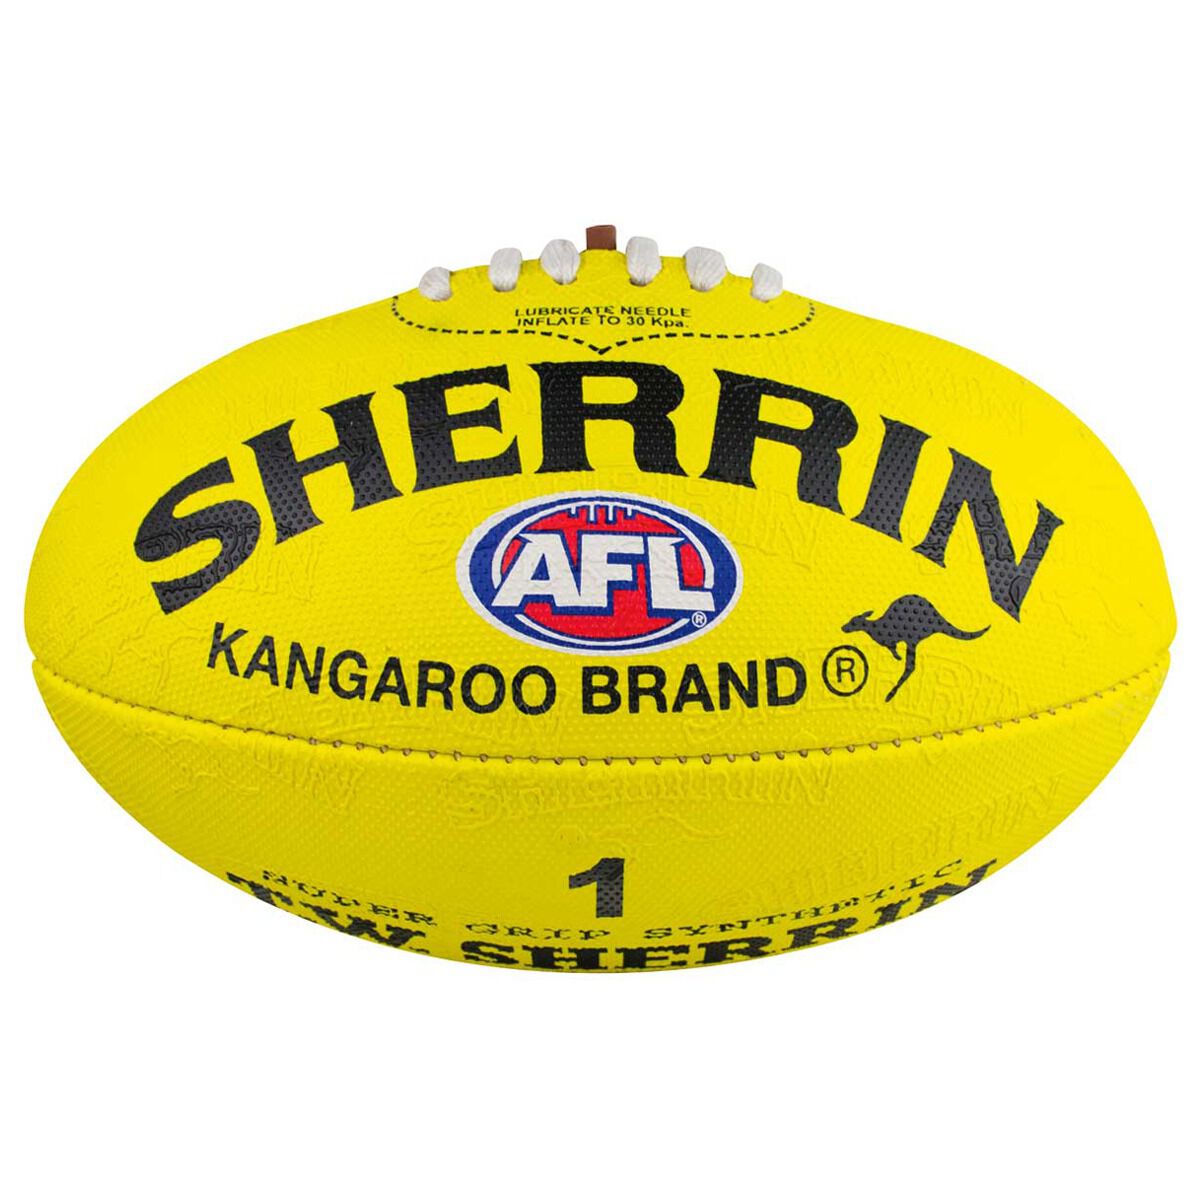 U14yrs PD008 ; Dellios Australian Rules Football Size 3 Yellow 